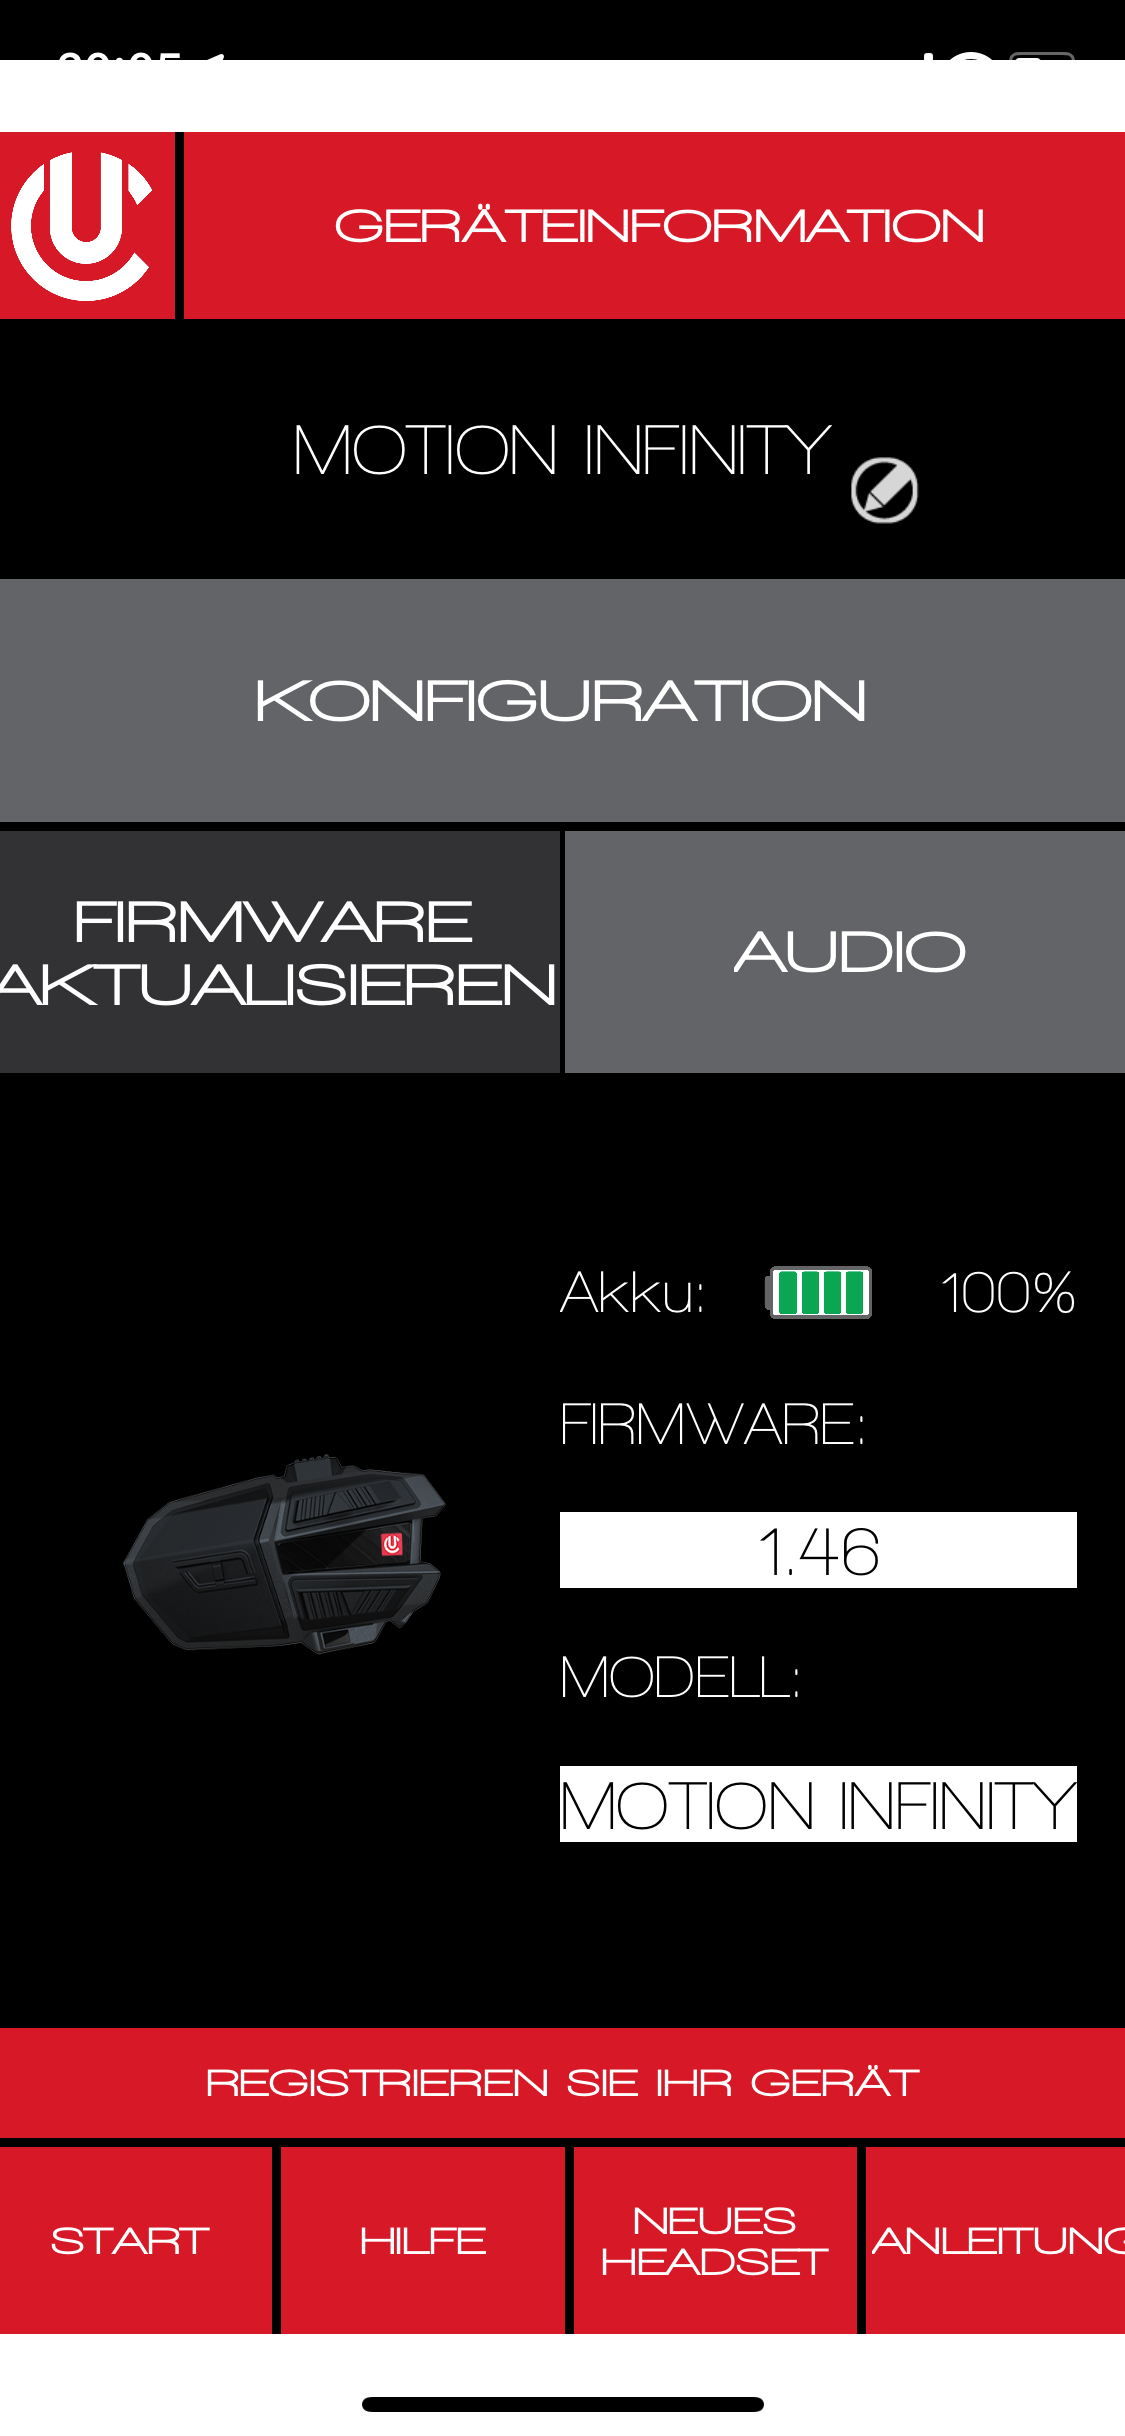 CLEARLink Konfiguration / Firmware aktualisieren / Audio